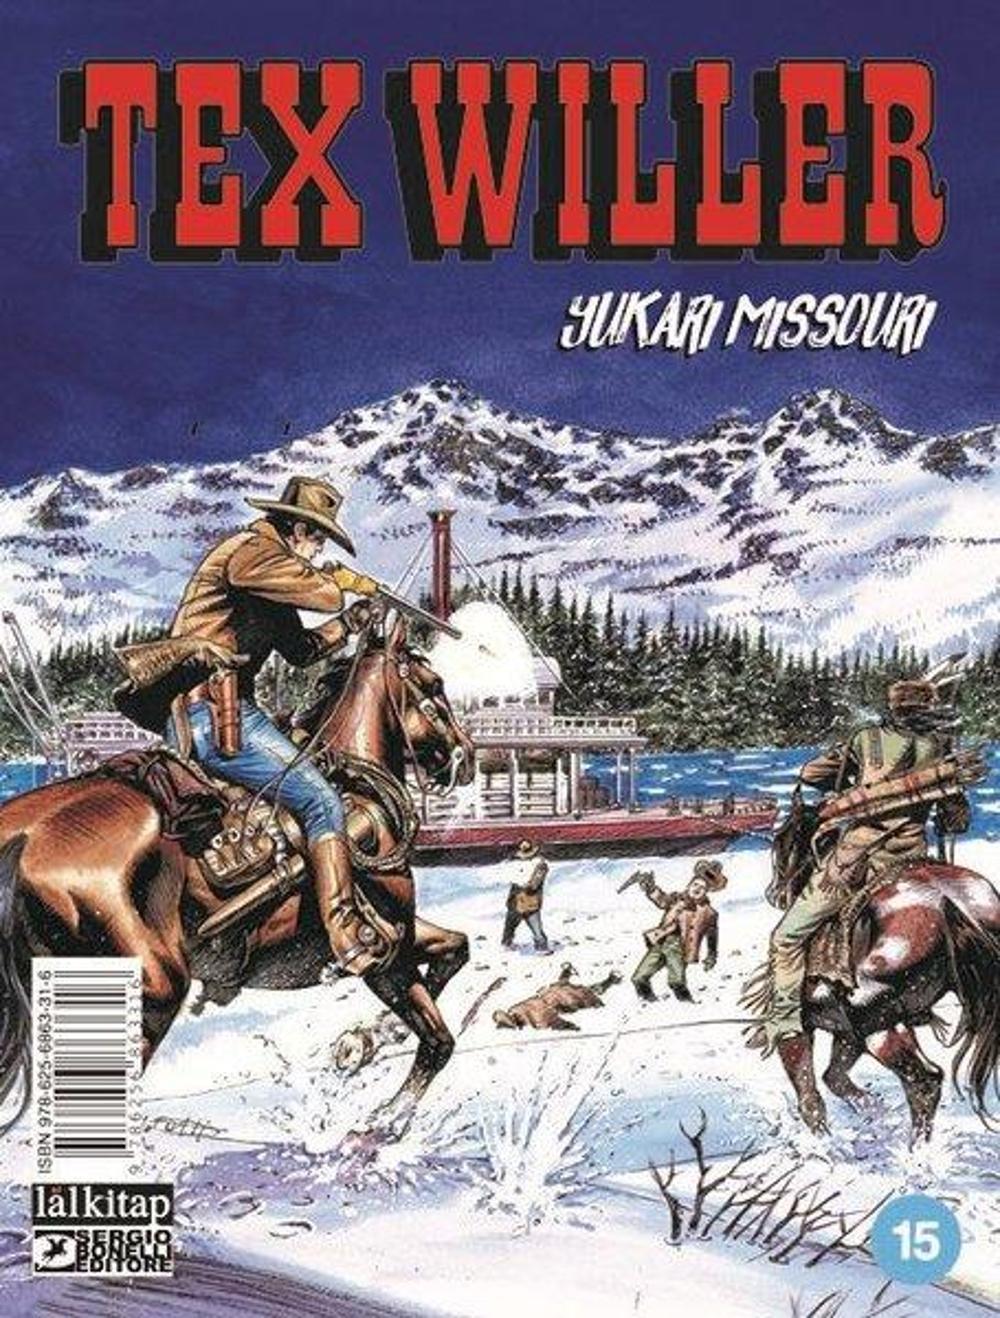 Tex Willer Sayı 15 - Yukarı Missouri | Lal